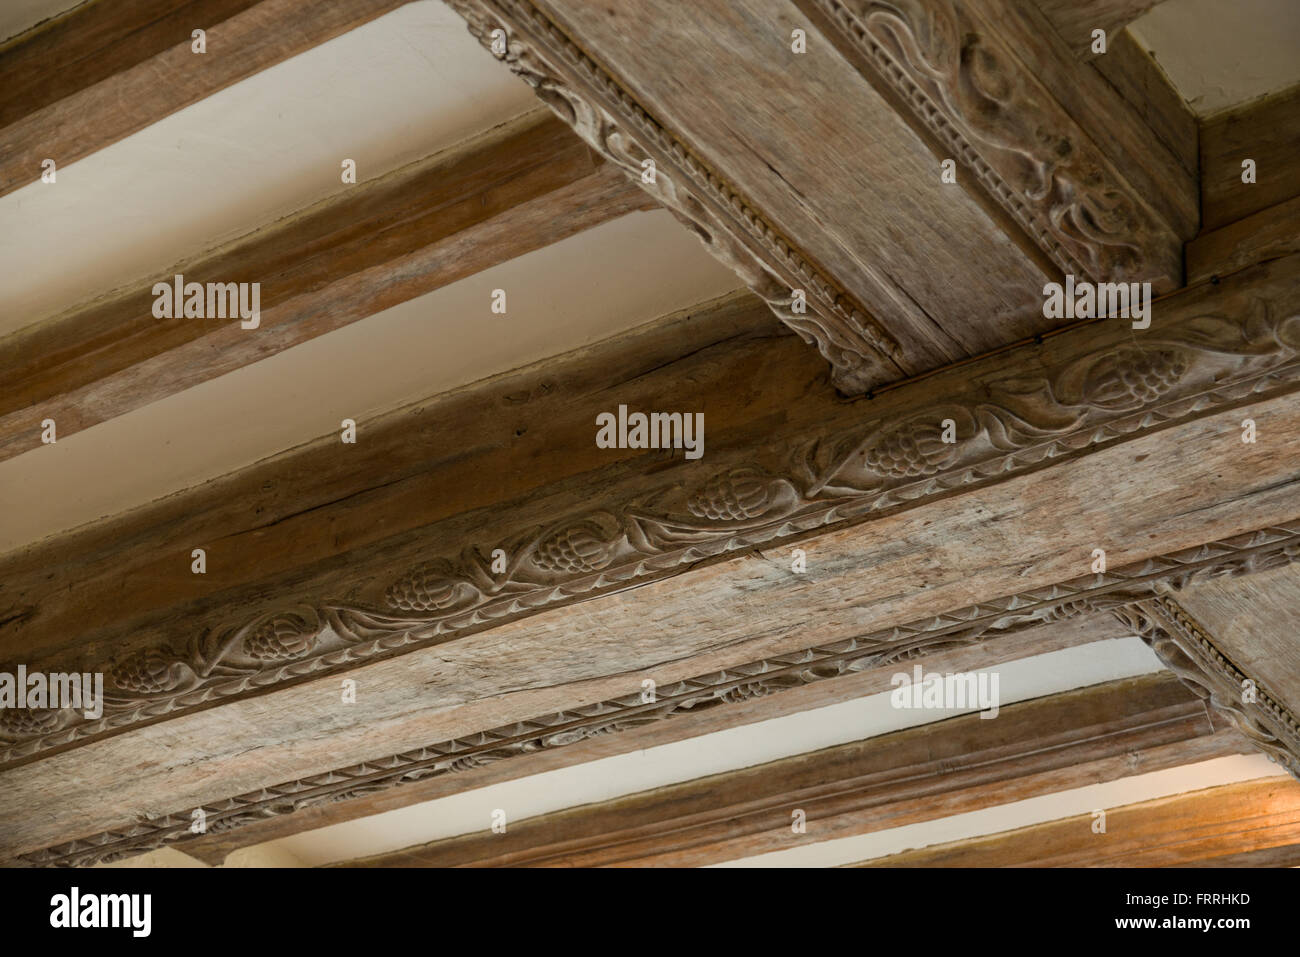 Vigas de madera decoradas fotografías e imágenes de alta resolución - Alamy